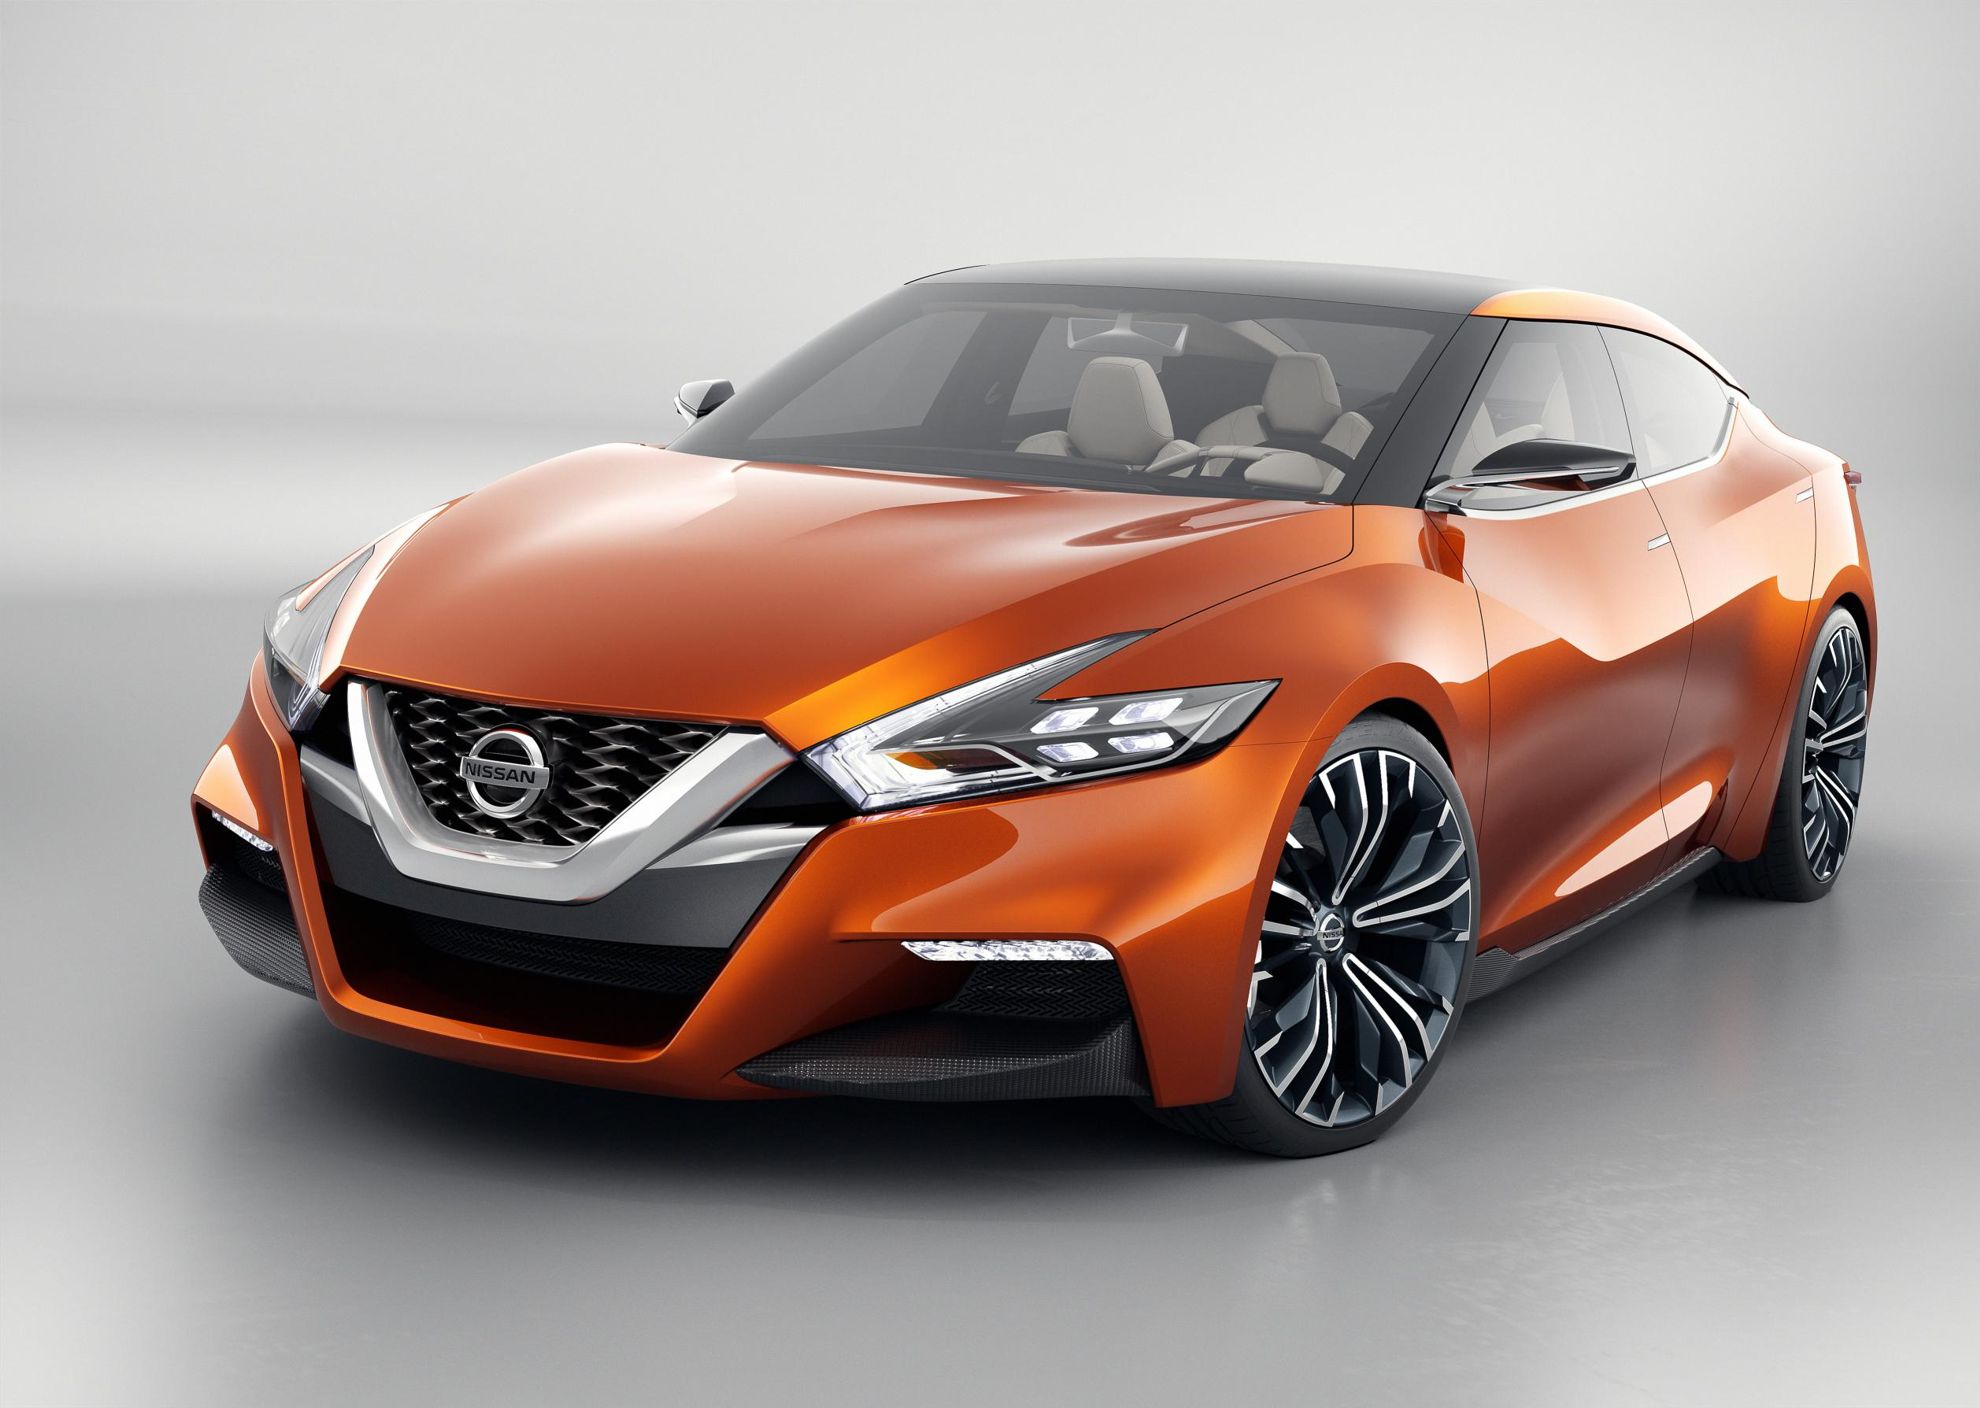 Autoweek Magazine Names Nissan Best Concept at NAIAS